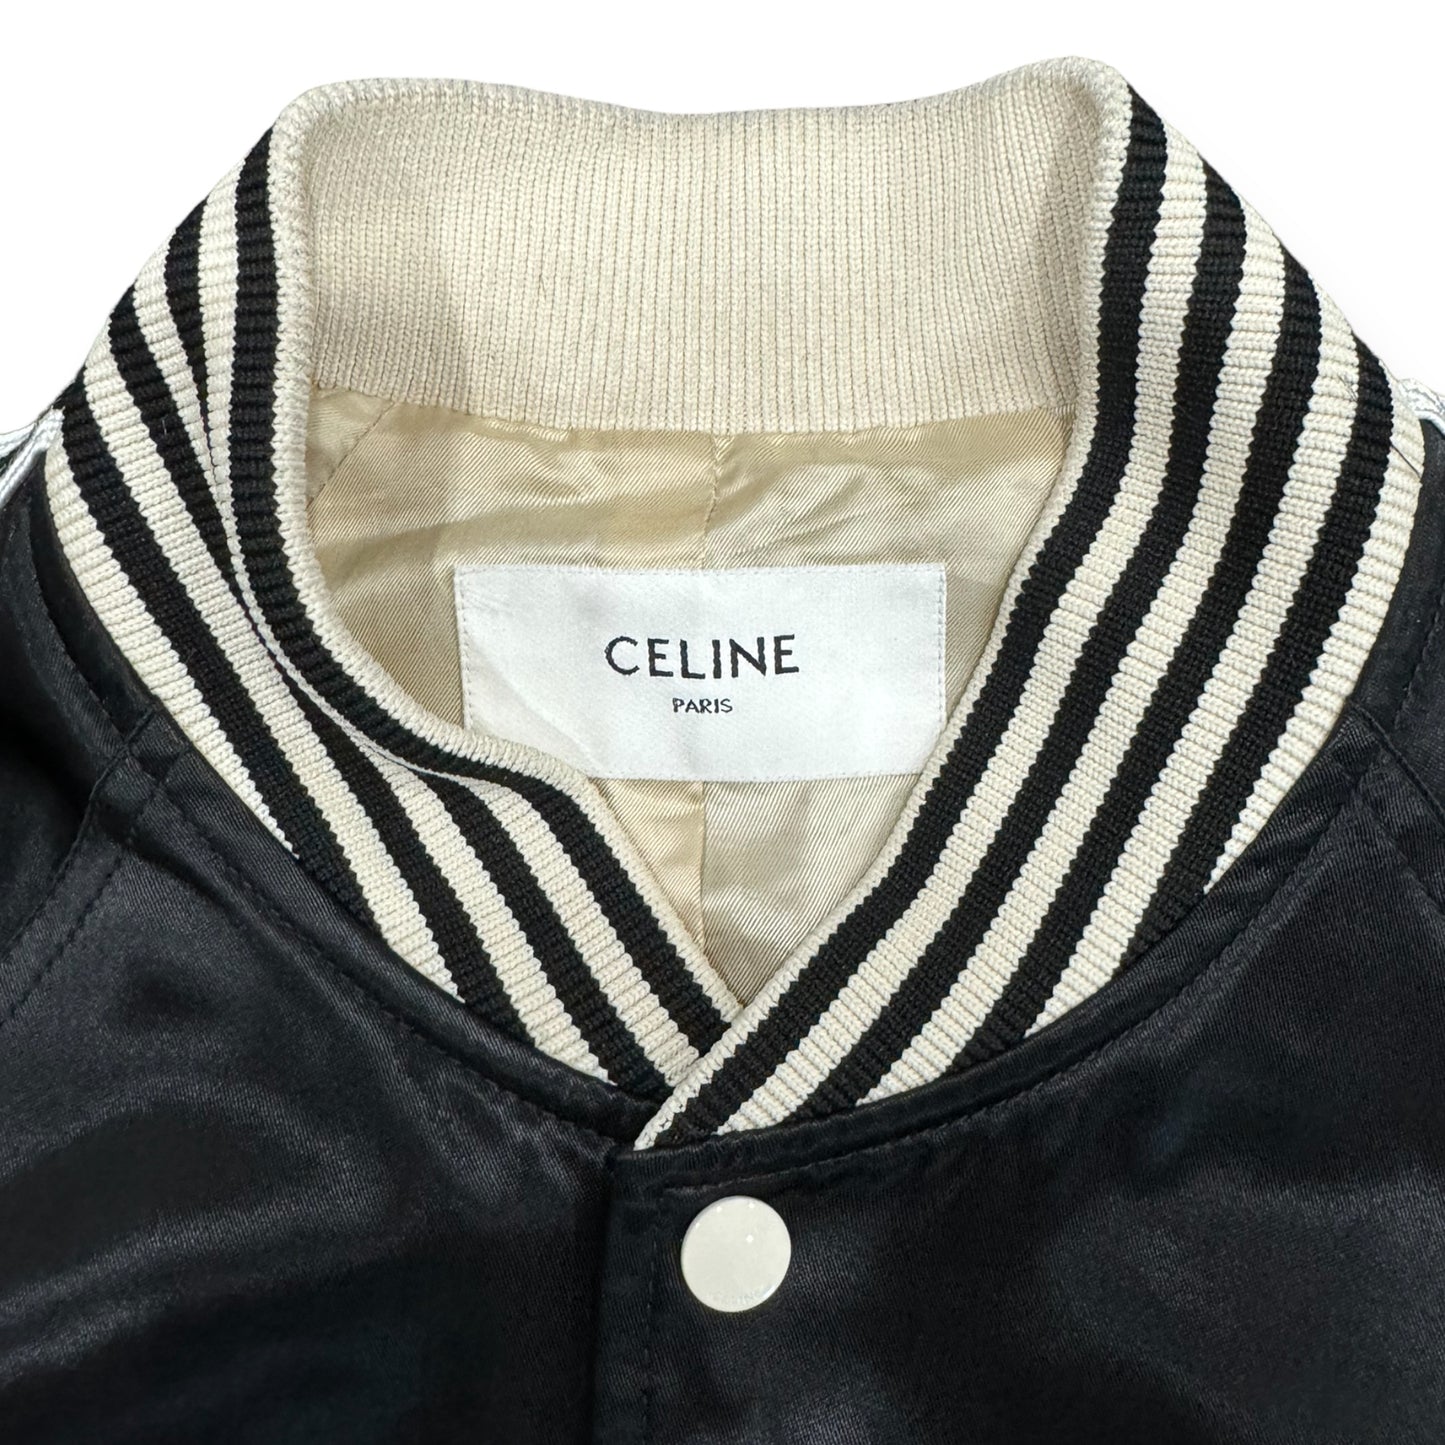 Celine Teddy Jacket size Small